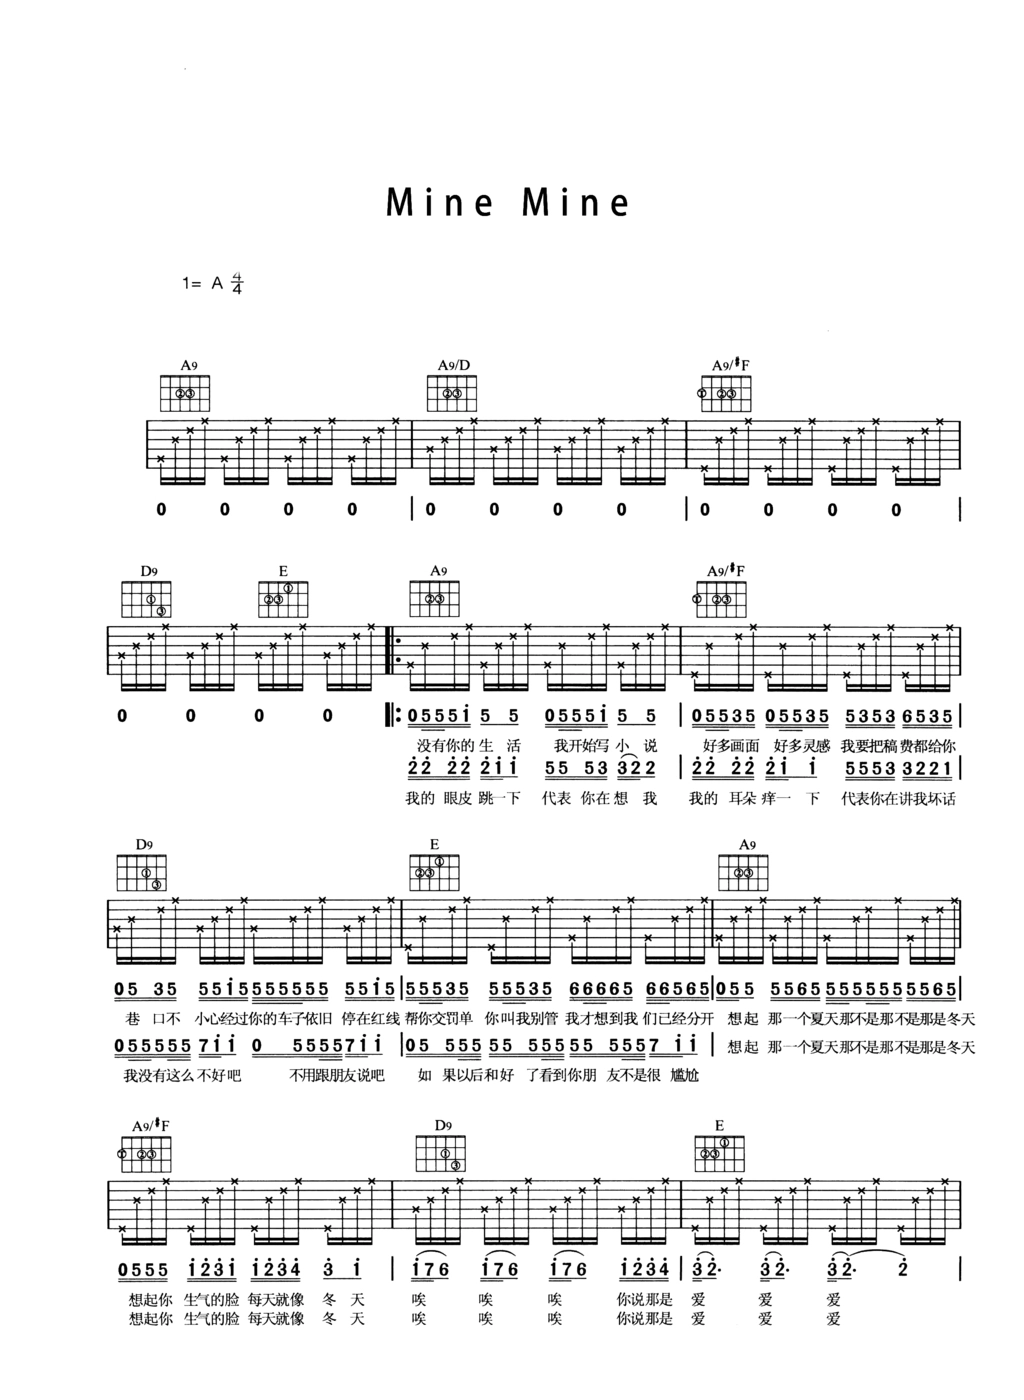 Mine Mine吉他谱原版Bb调弹唱 - 周杰伦 - 诗意深沉心灵震撼 | 吉他湾